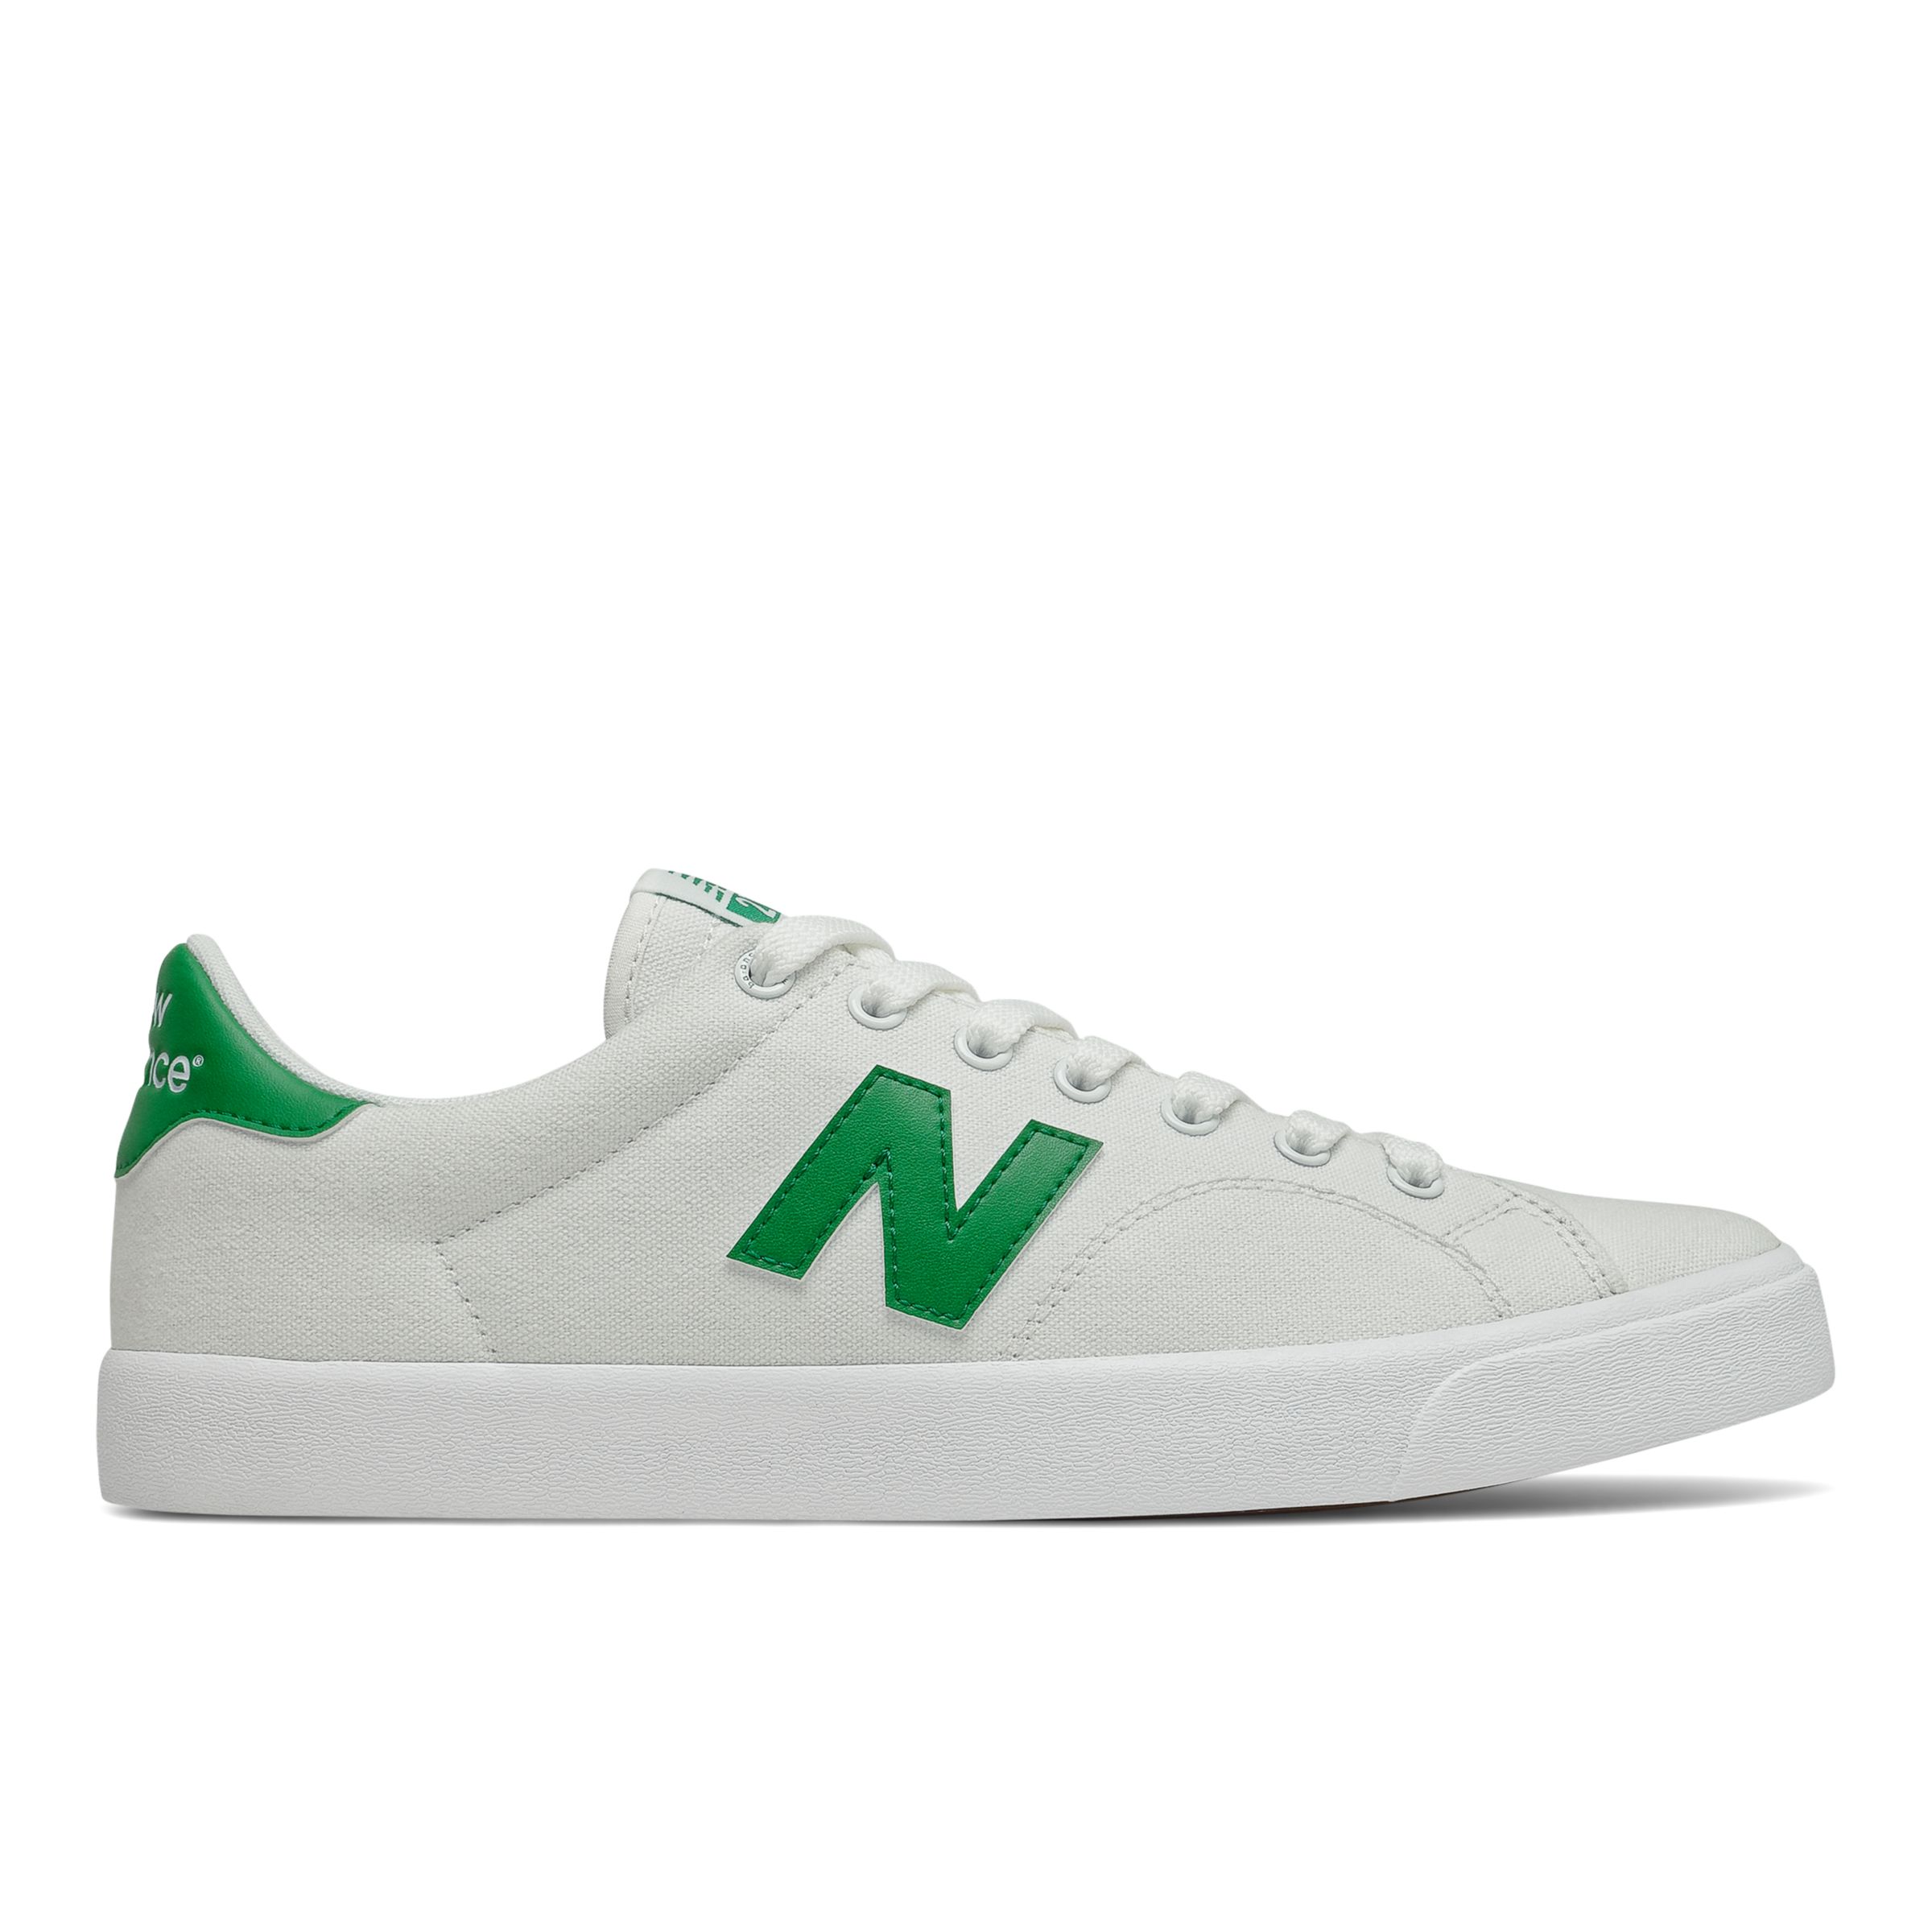 nb green shoes